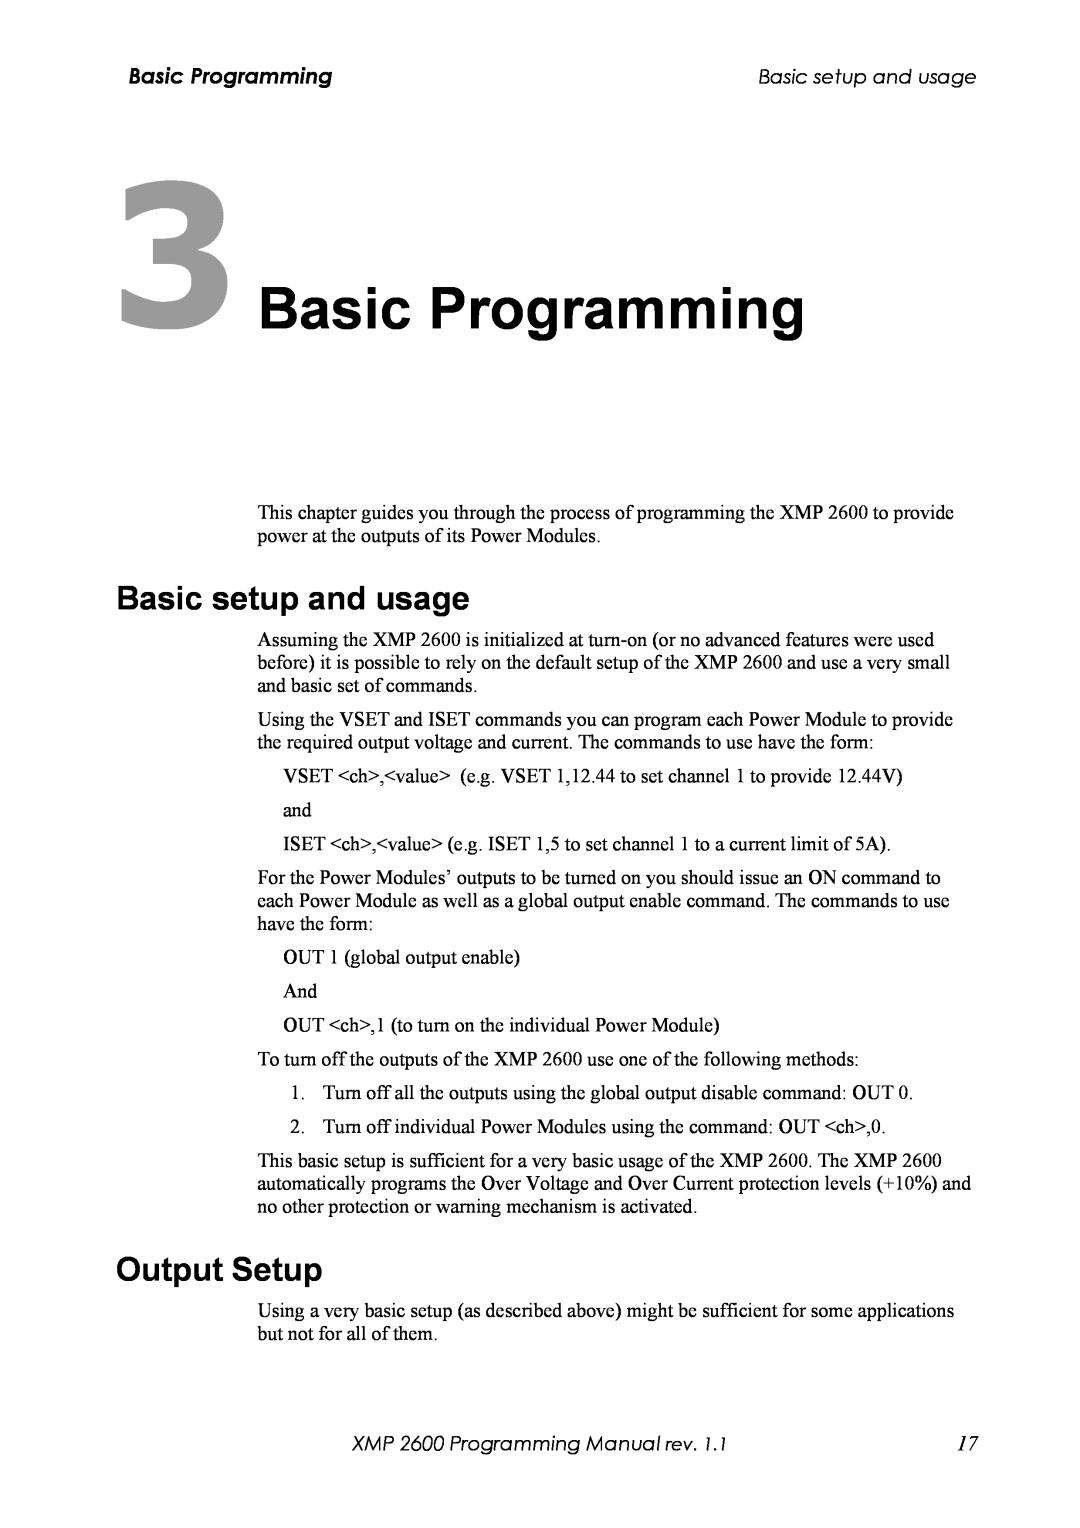 Xantrex Technology manual 3Basic Programming, Basic setup and usage, Output Setup, XMP 2600 Programming Manual rev 